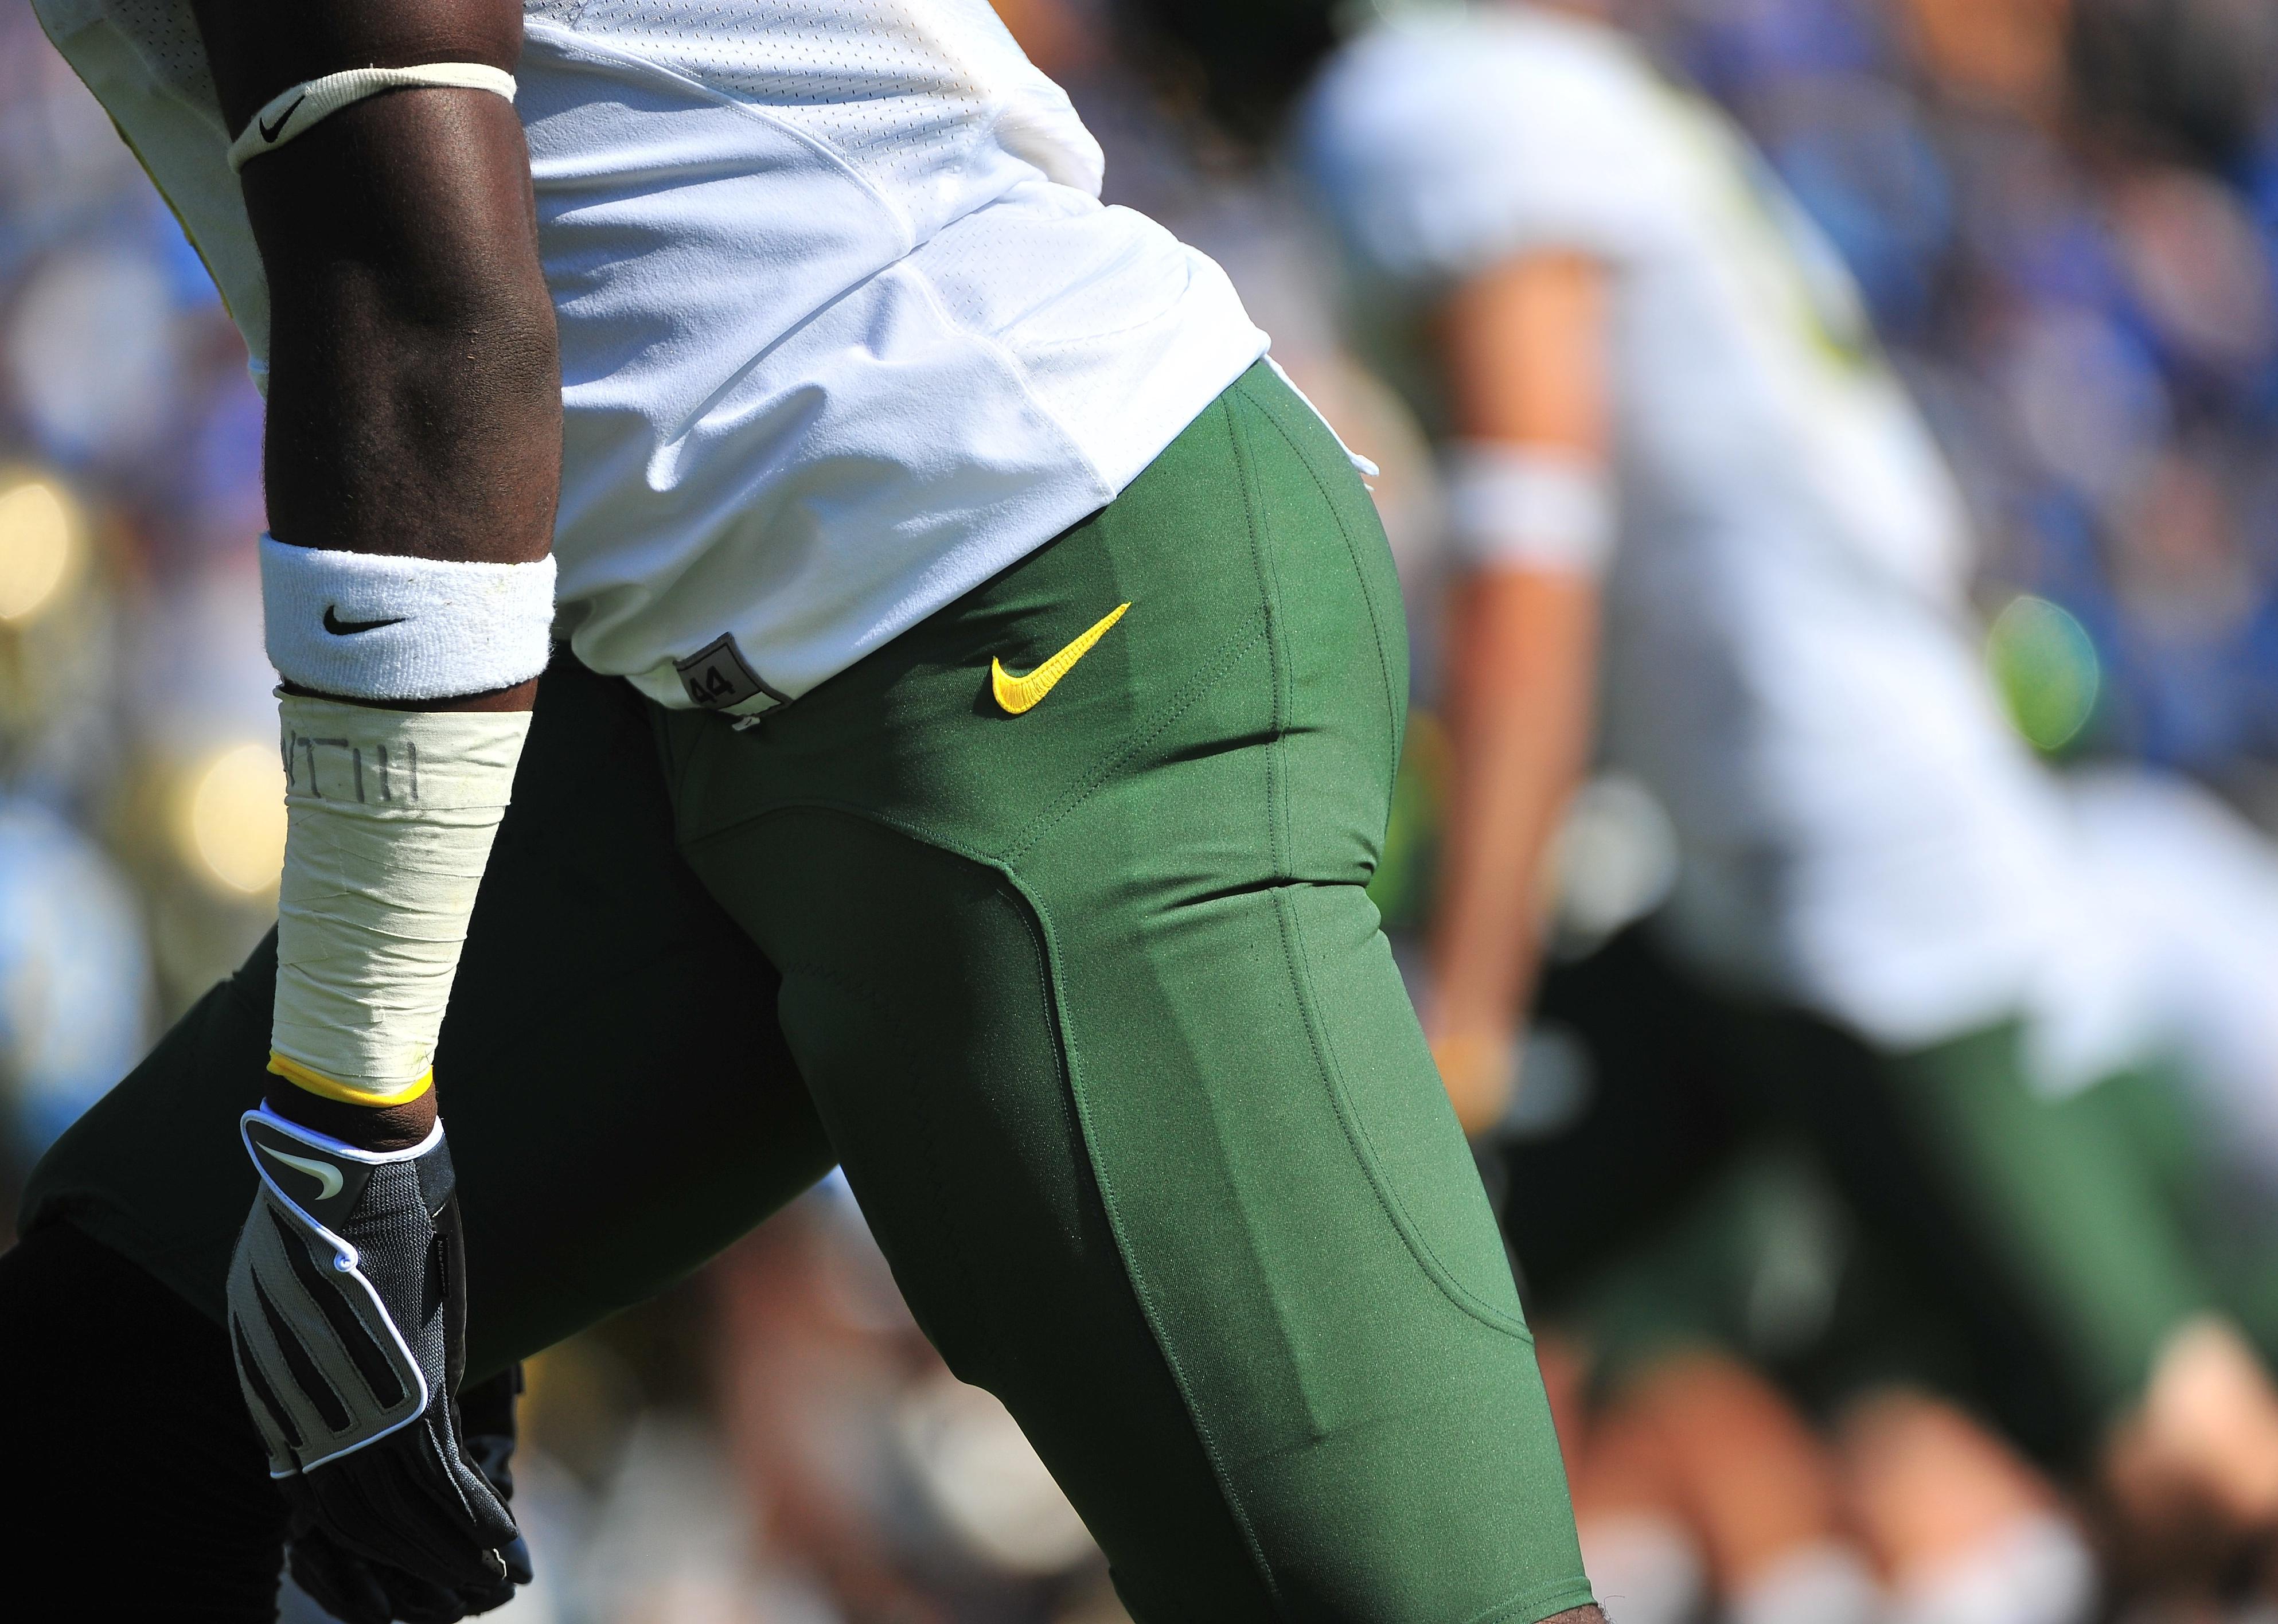  Oregon player detail shot of pants and leg with Nike logos.